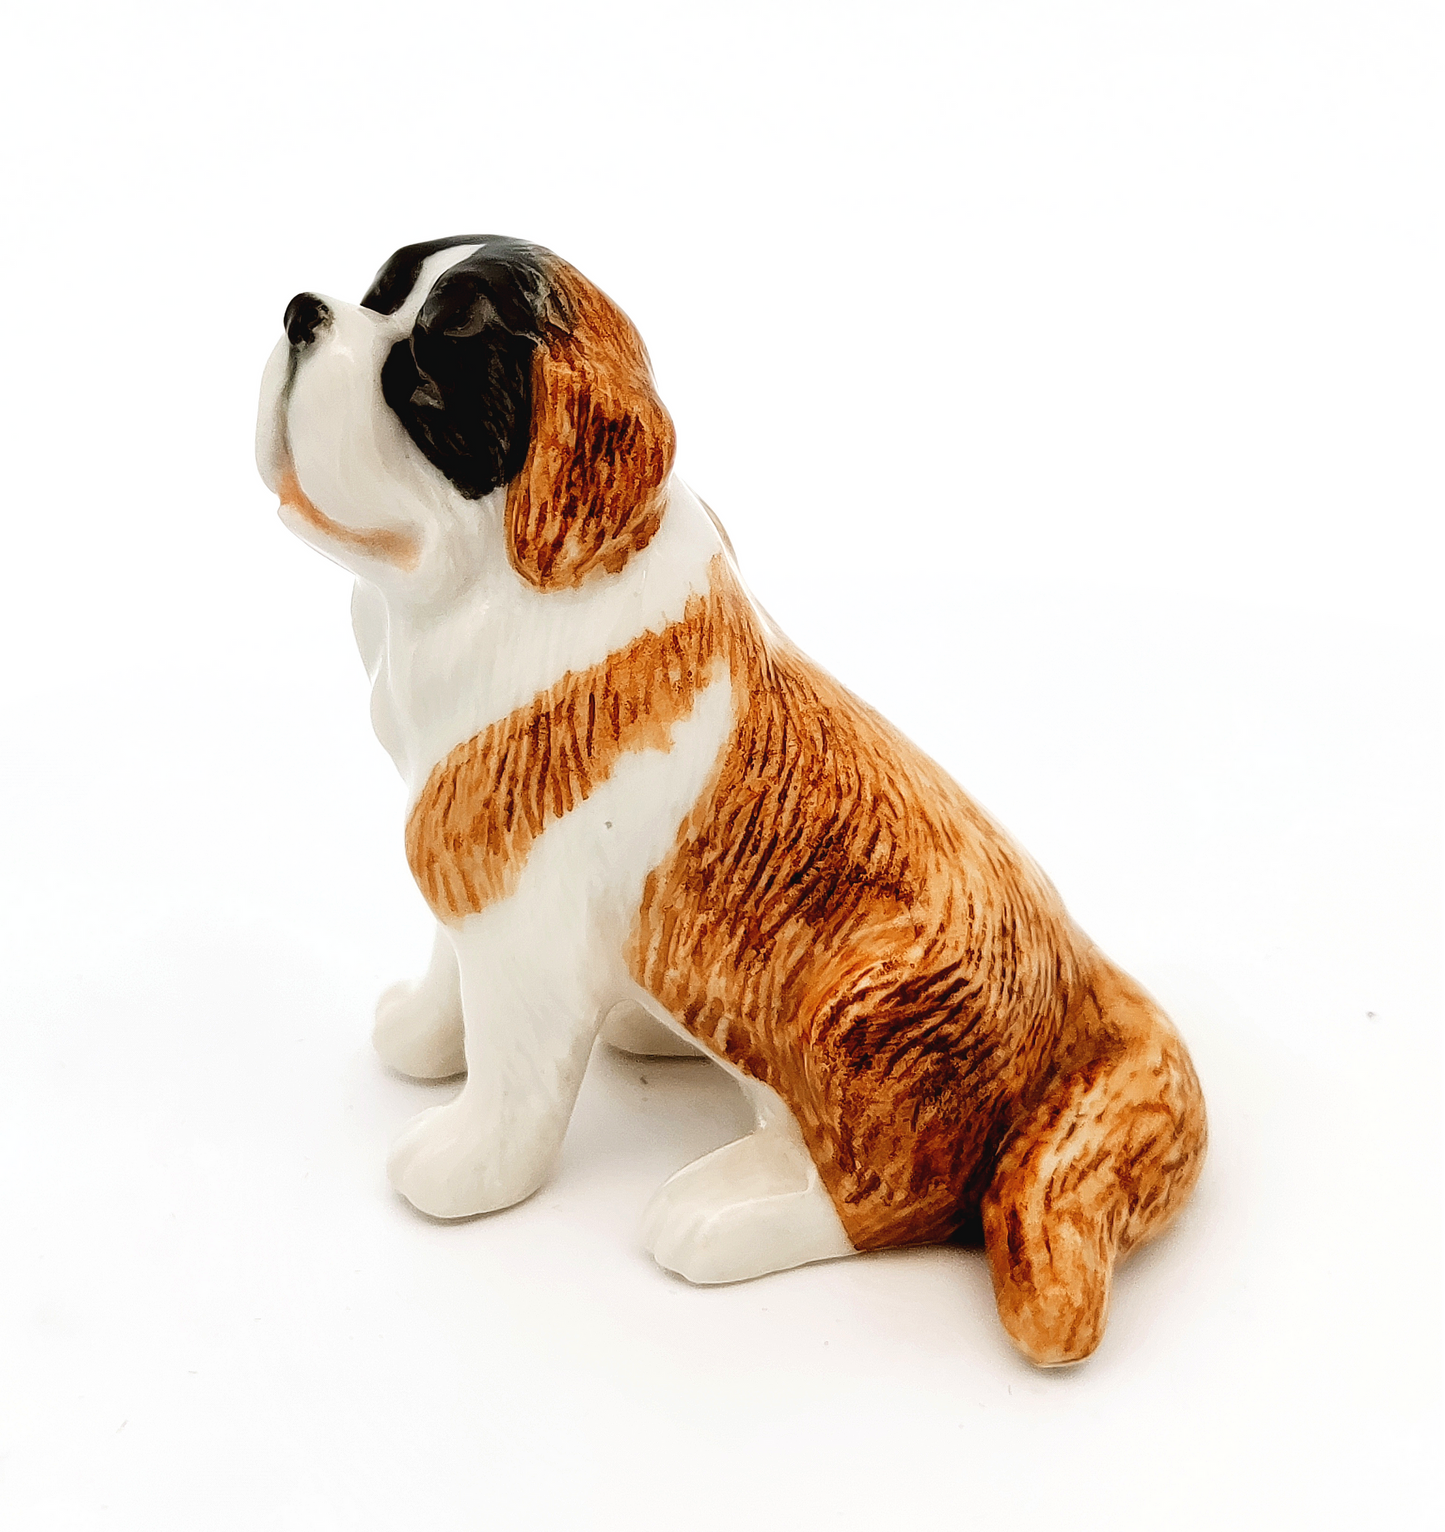 Saint Bernard Dog Ceramic Figurine Hand Painted Porcelain Gift Collectible DecorHandmade Miniatures Cerami Figurine Animals Decor Collection